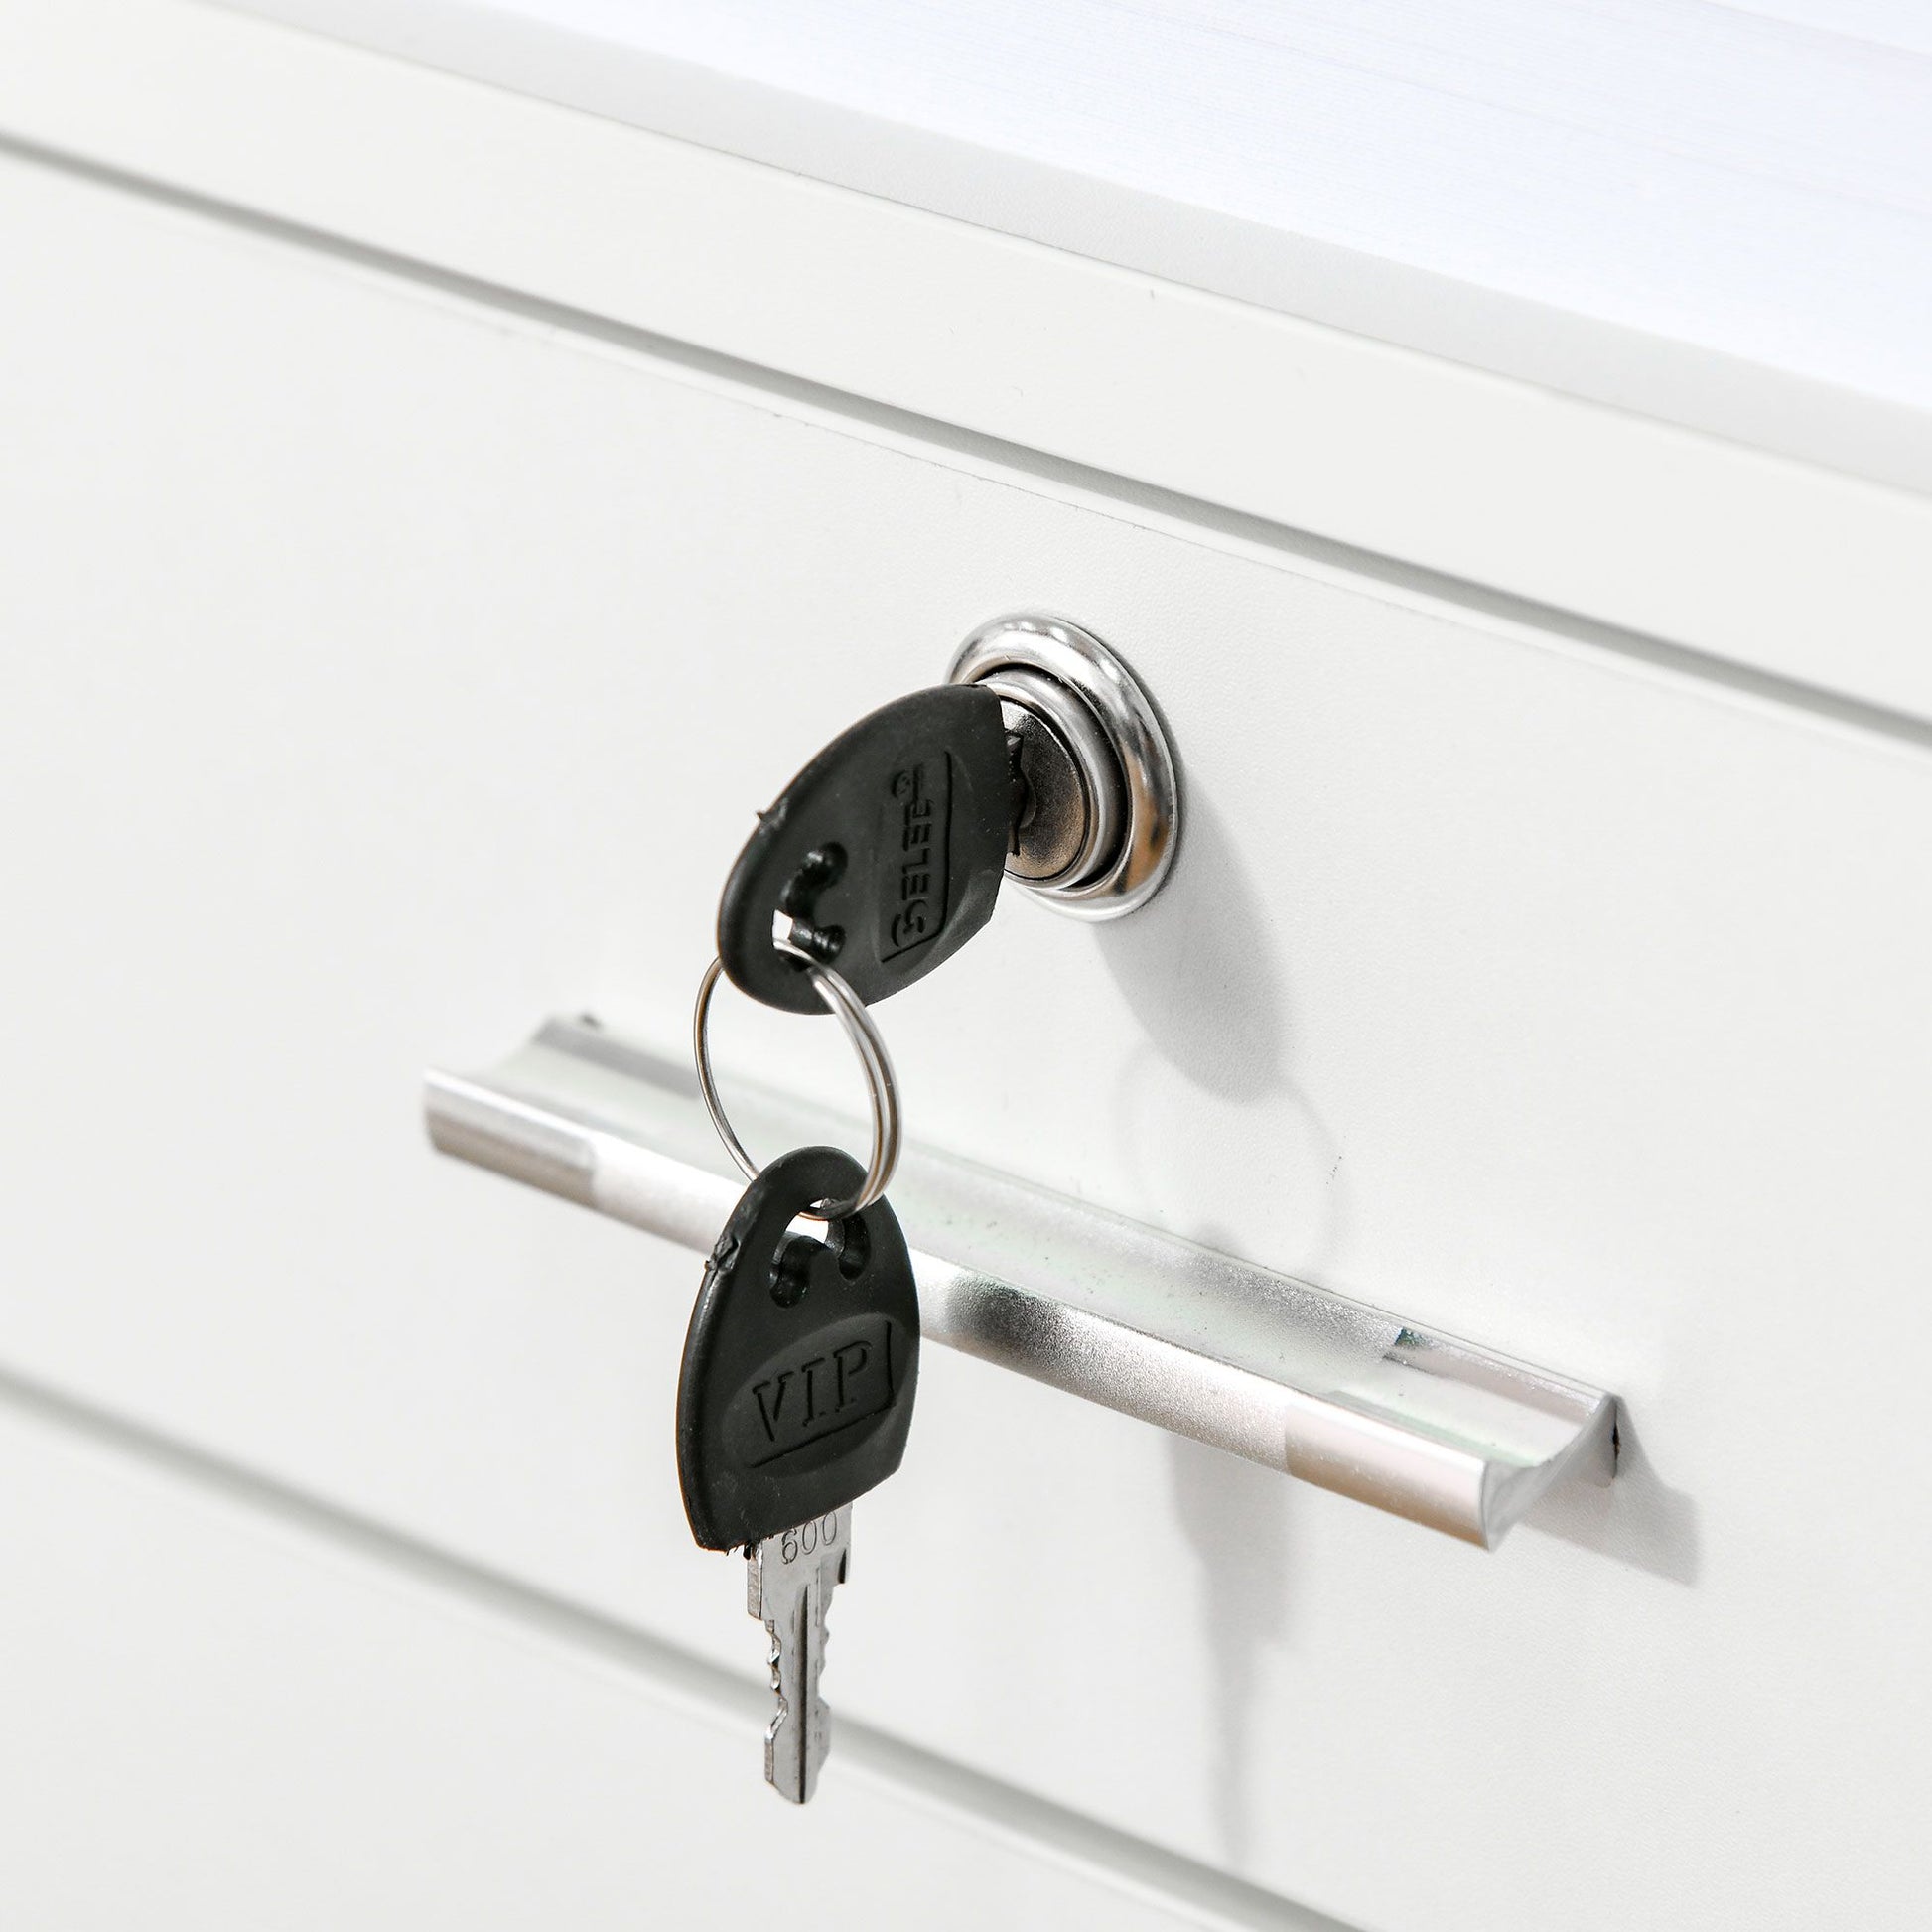 ProperAV Extra Mobile Lockable Filing Cabinet - maplin.co.uk